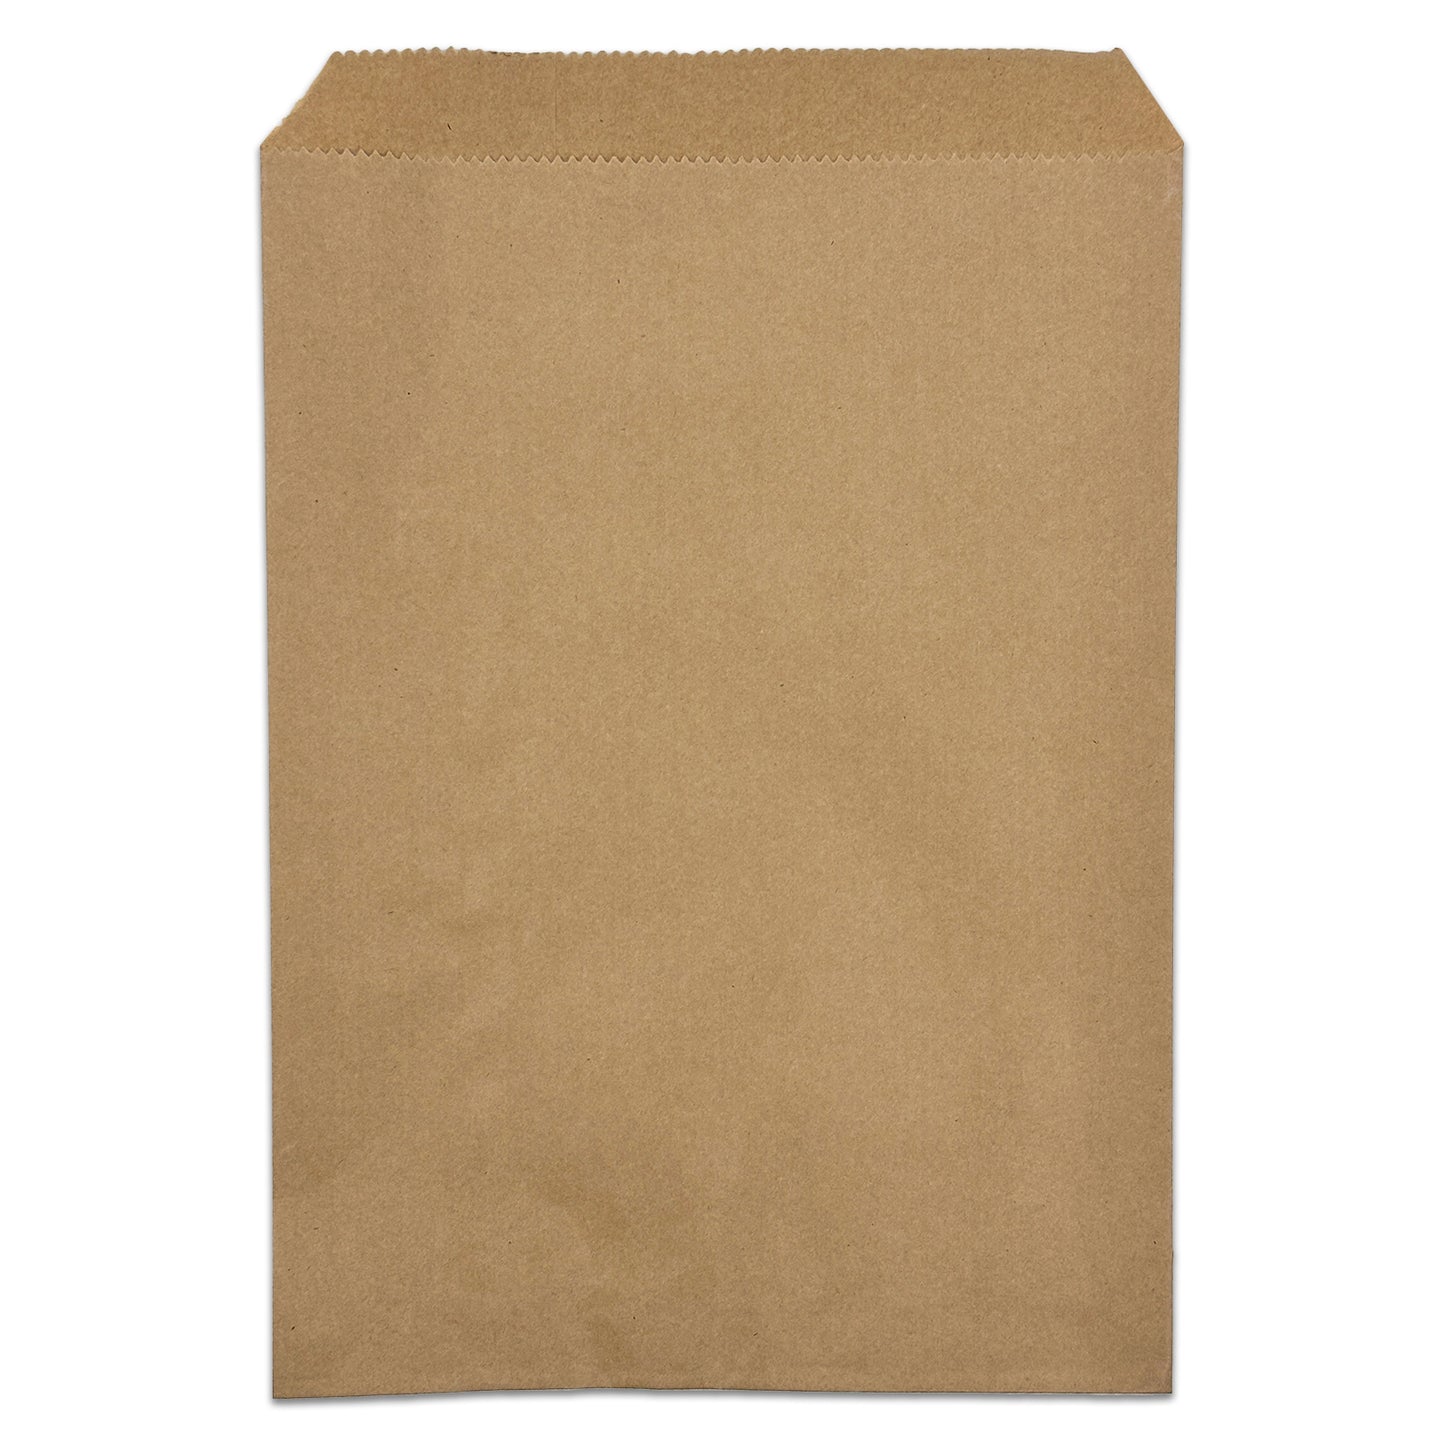 6" x 8 1/2" Kraft Flat Paper Gift Shopping Bags